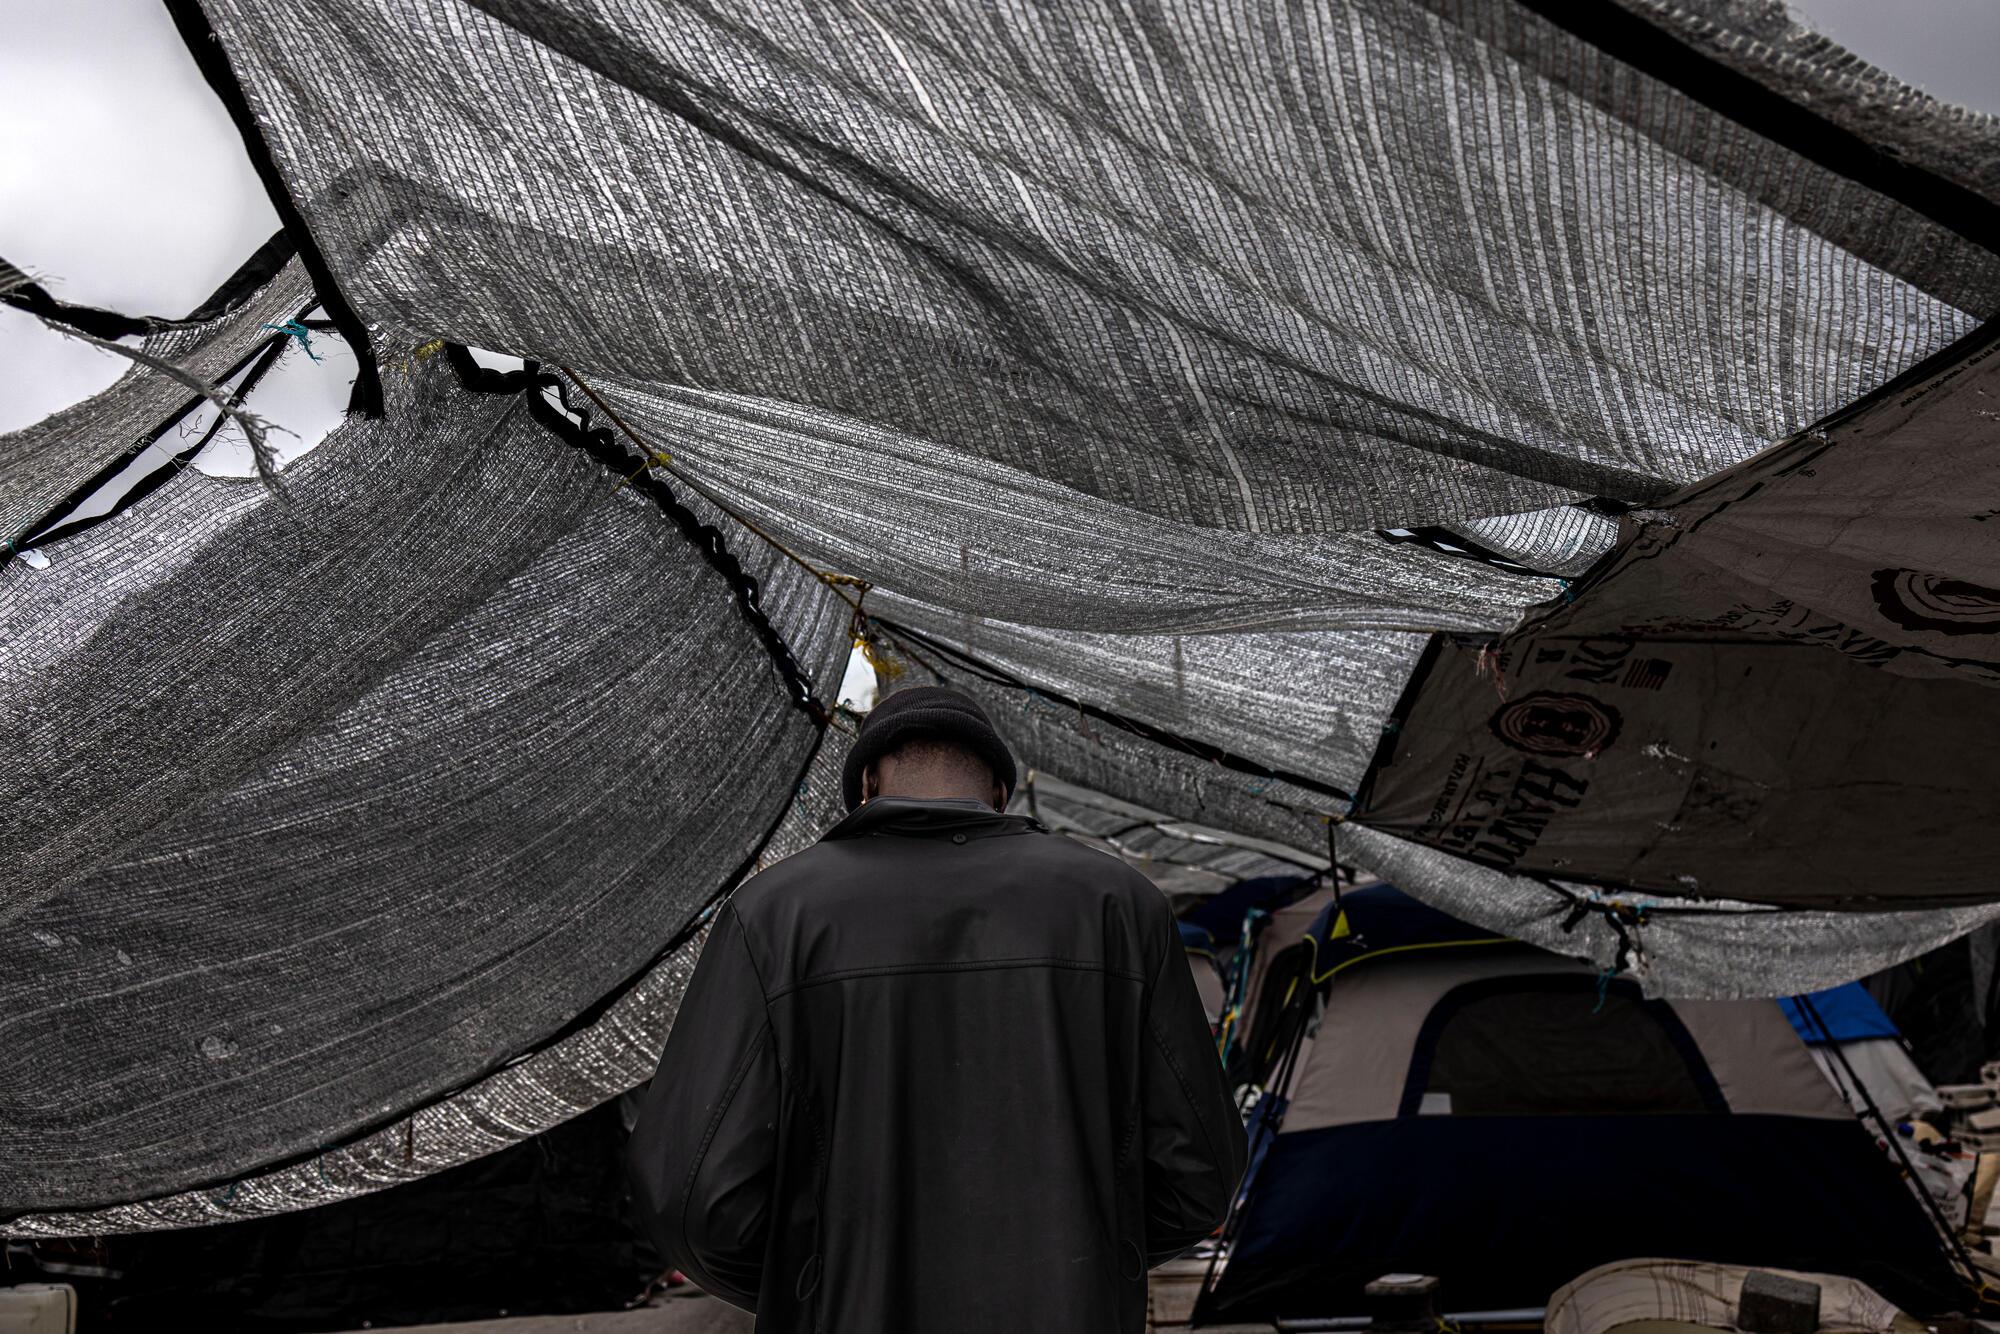 A Haitian migrant walks under the shade of mesh tarps in the "Senda de Vida" shelter in Reynosa, Mexico. 